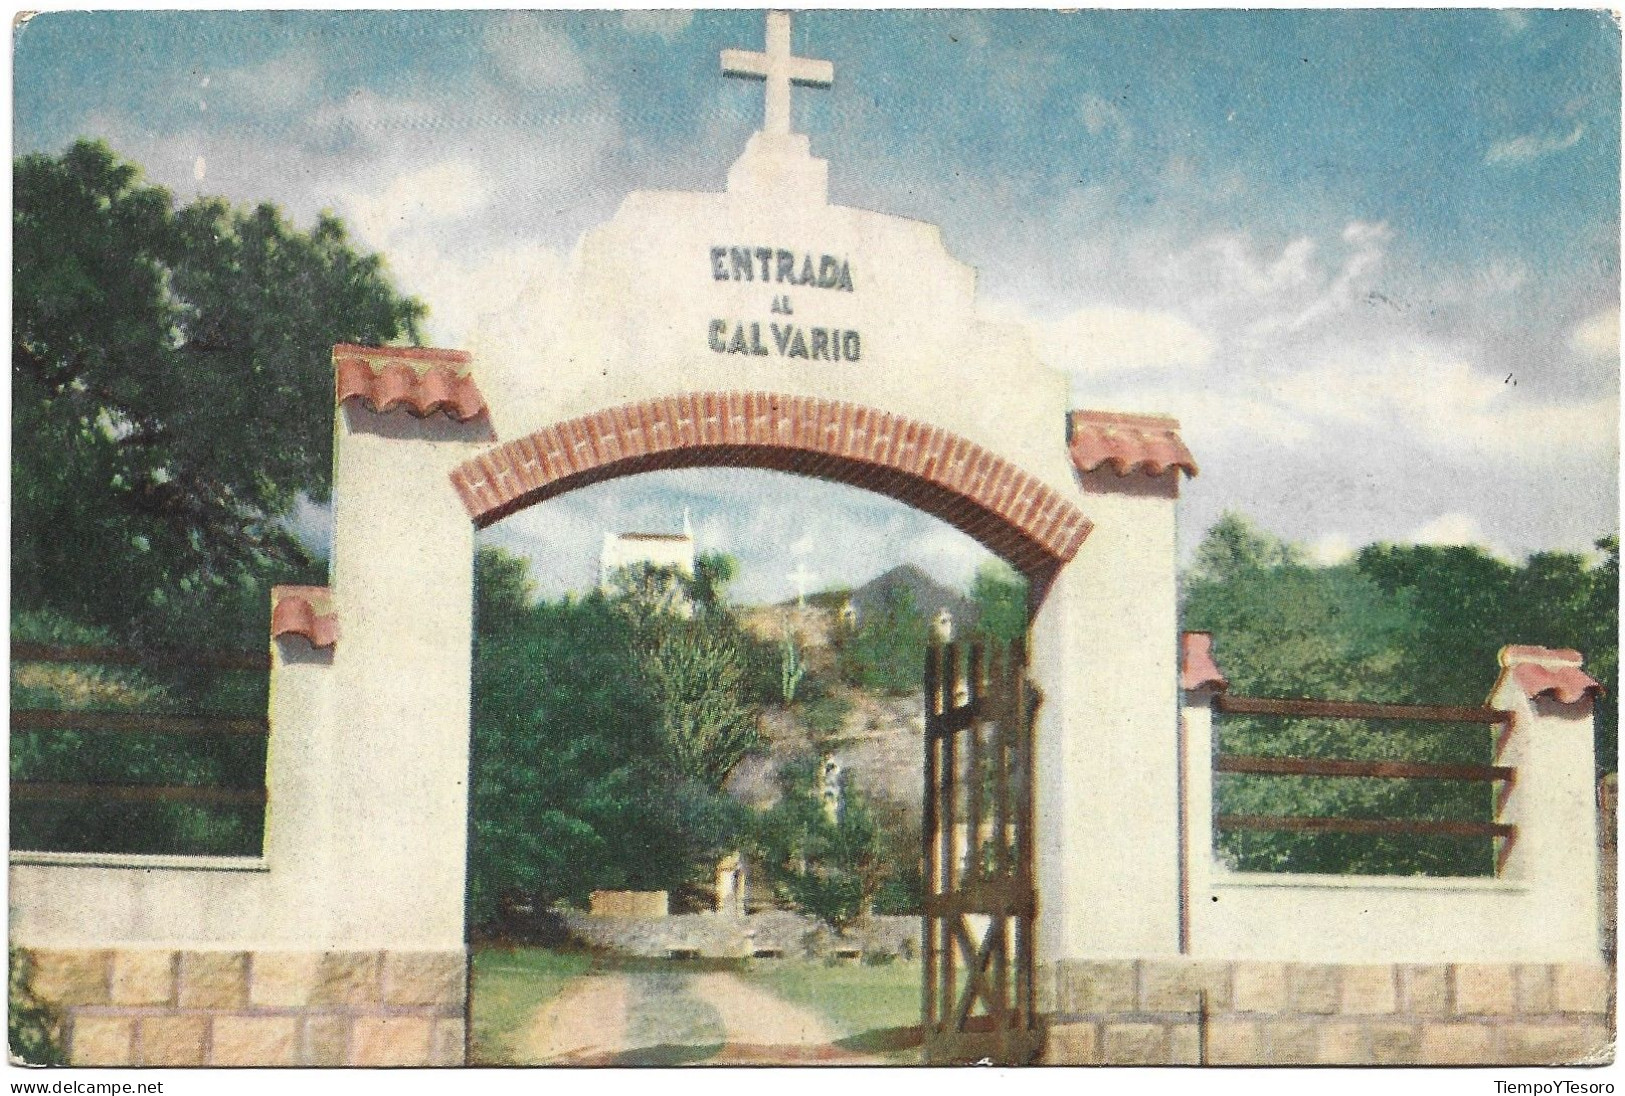 Postcard - Argentina, Catamarca, Chacarita De Los Padres, N°1394 - Argentinië